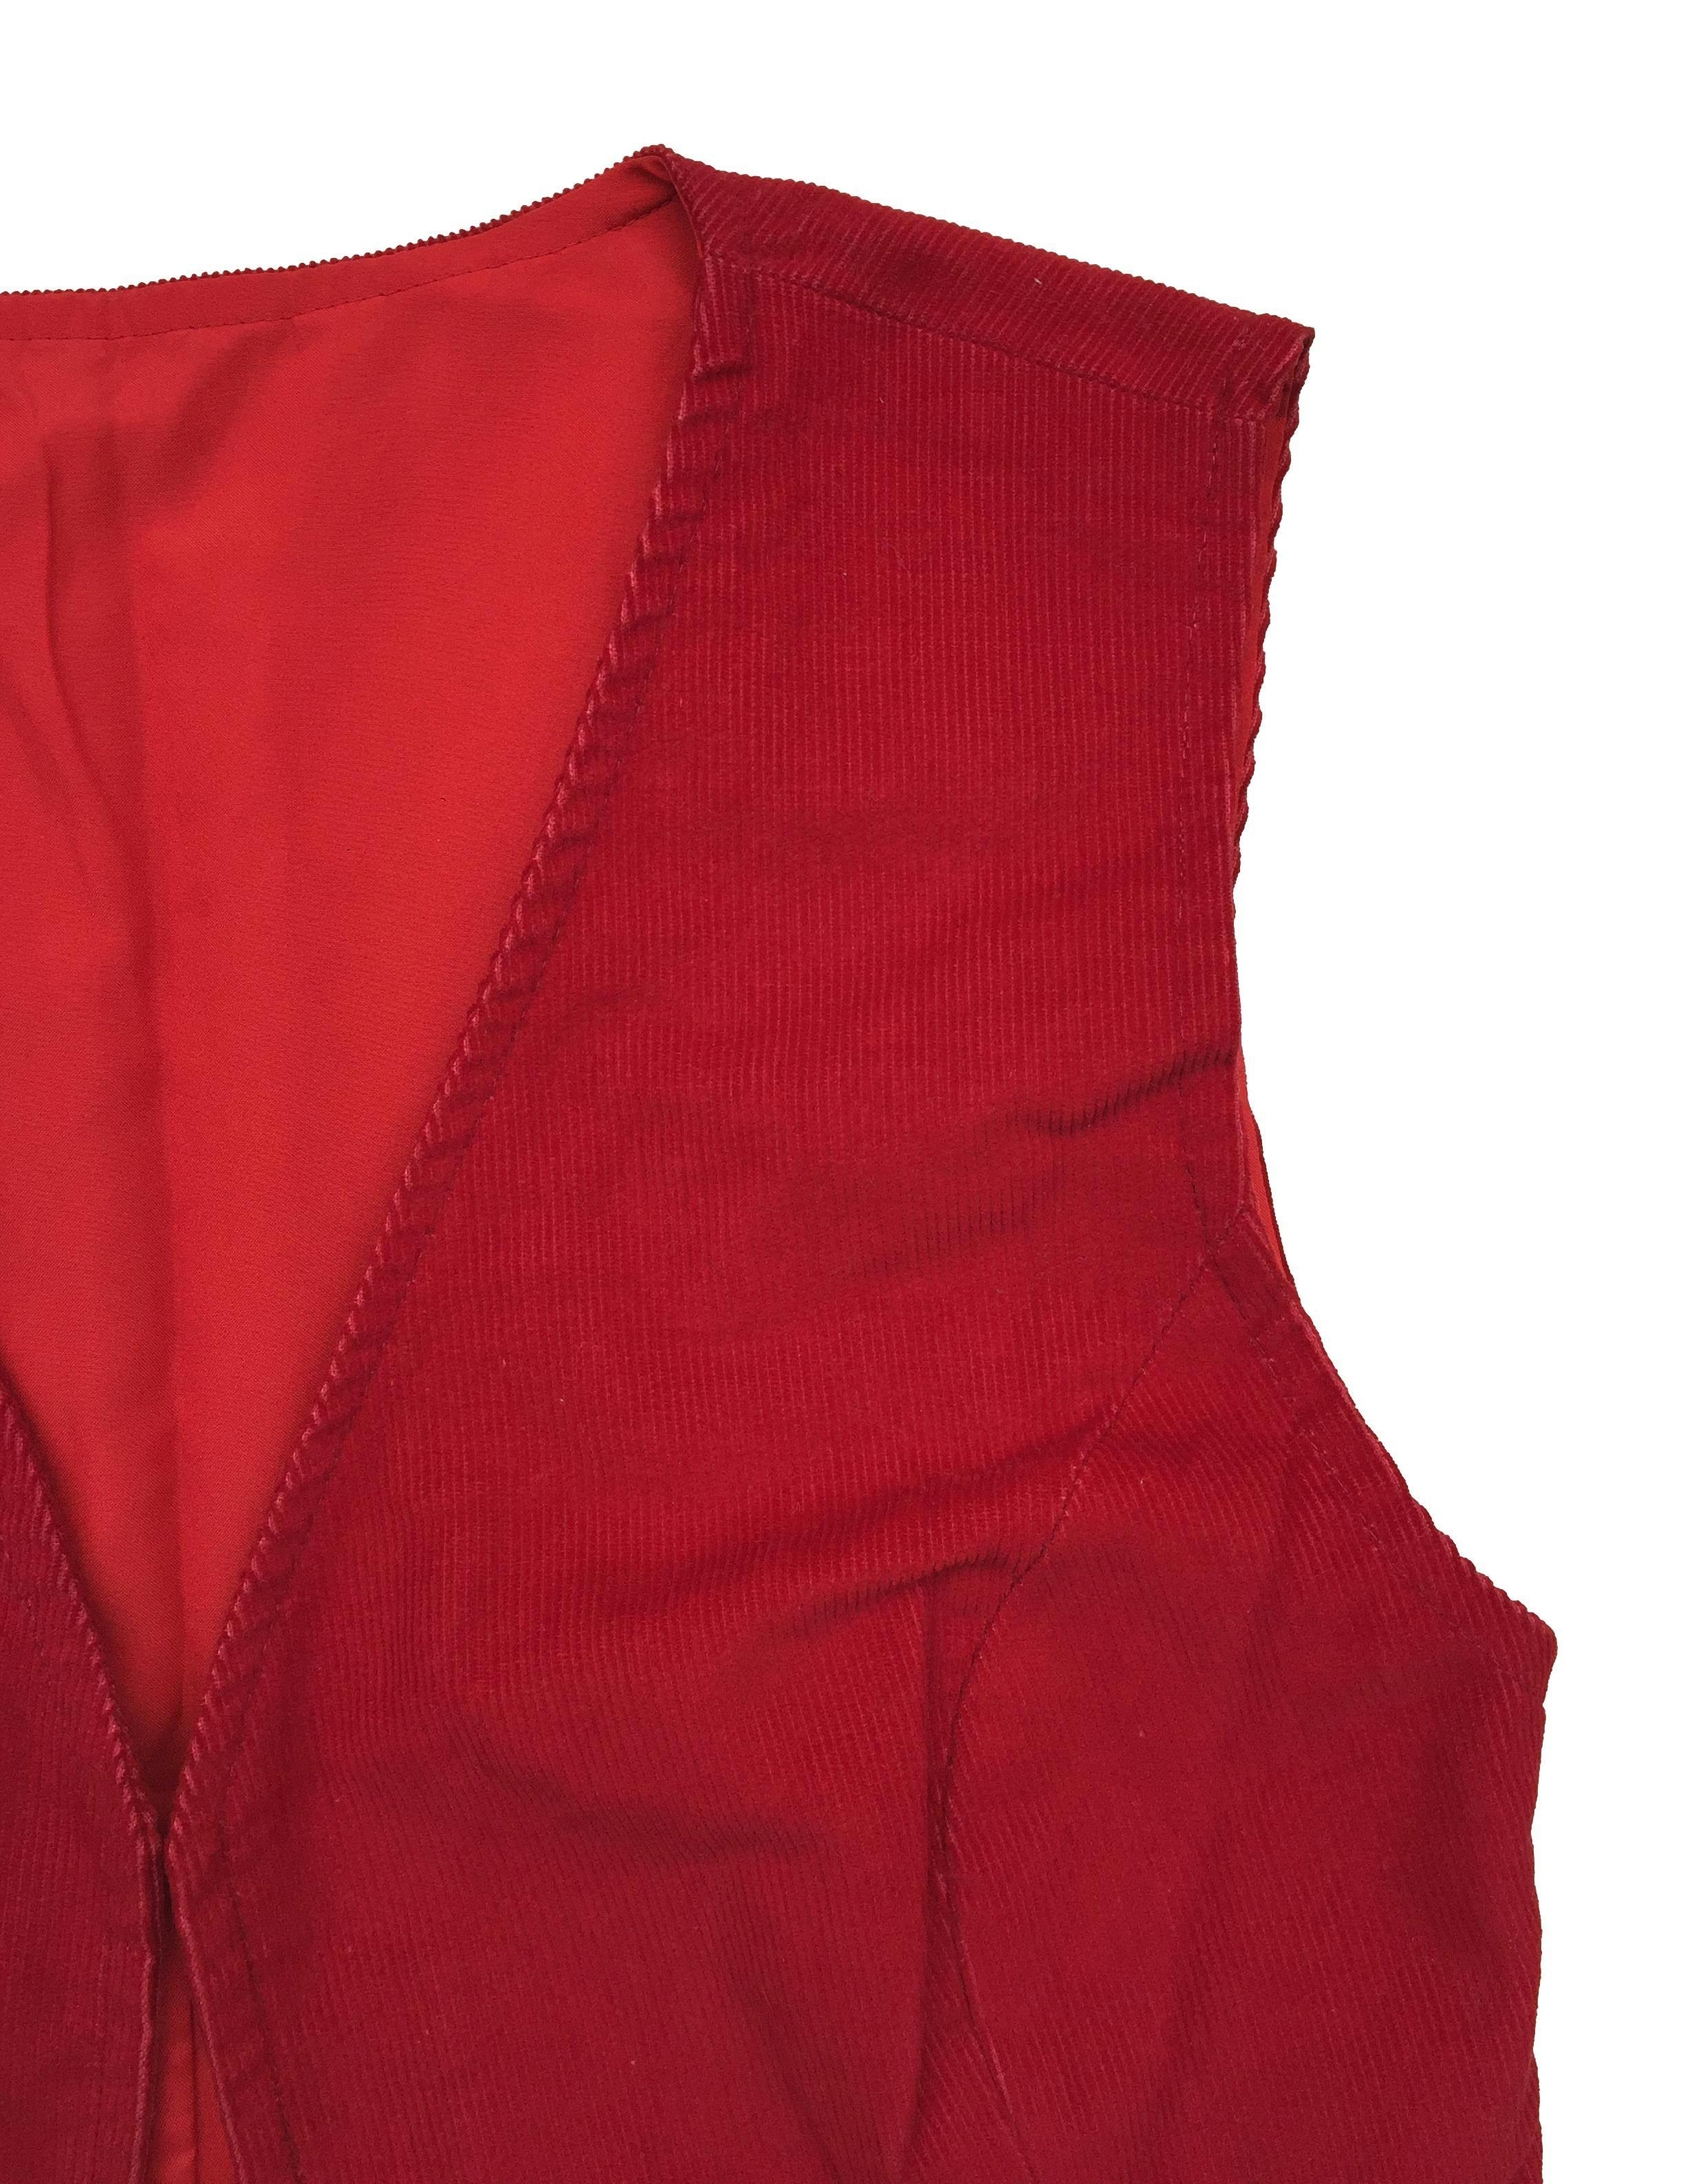 Chaleco rojo de corduroy con forro, modelo abierto. Busto: 90cm, Largo: 48cm